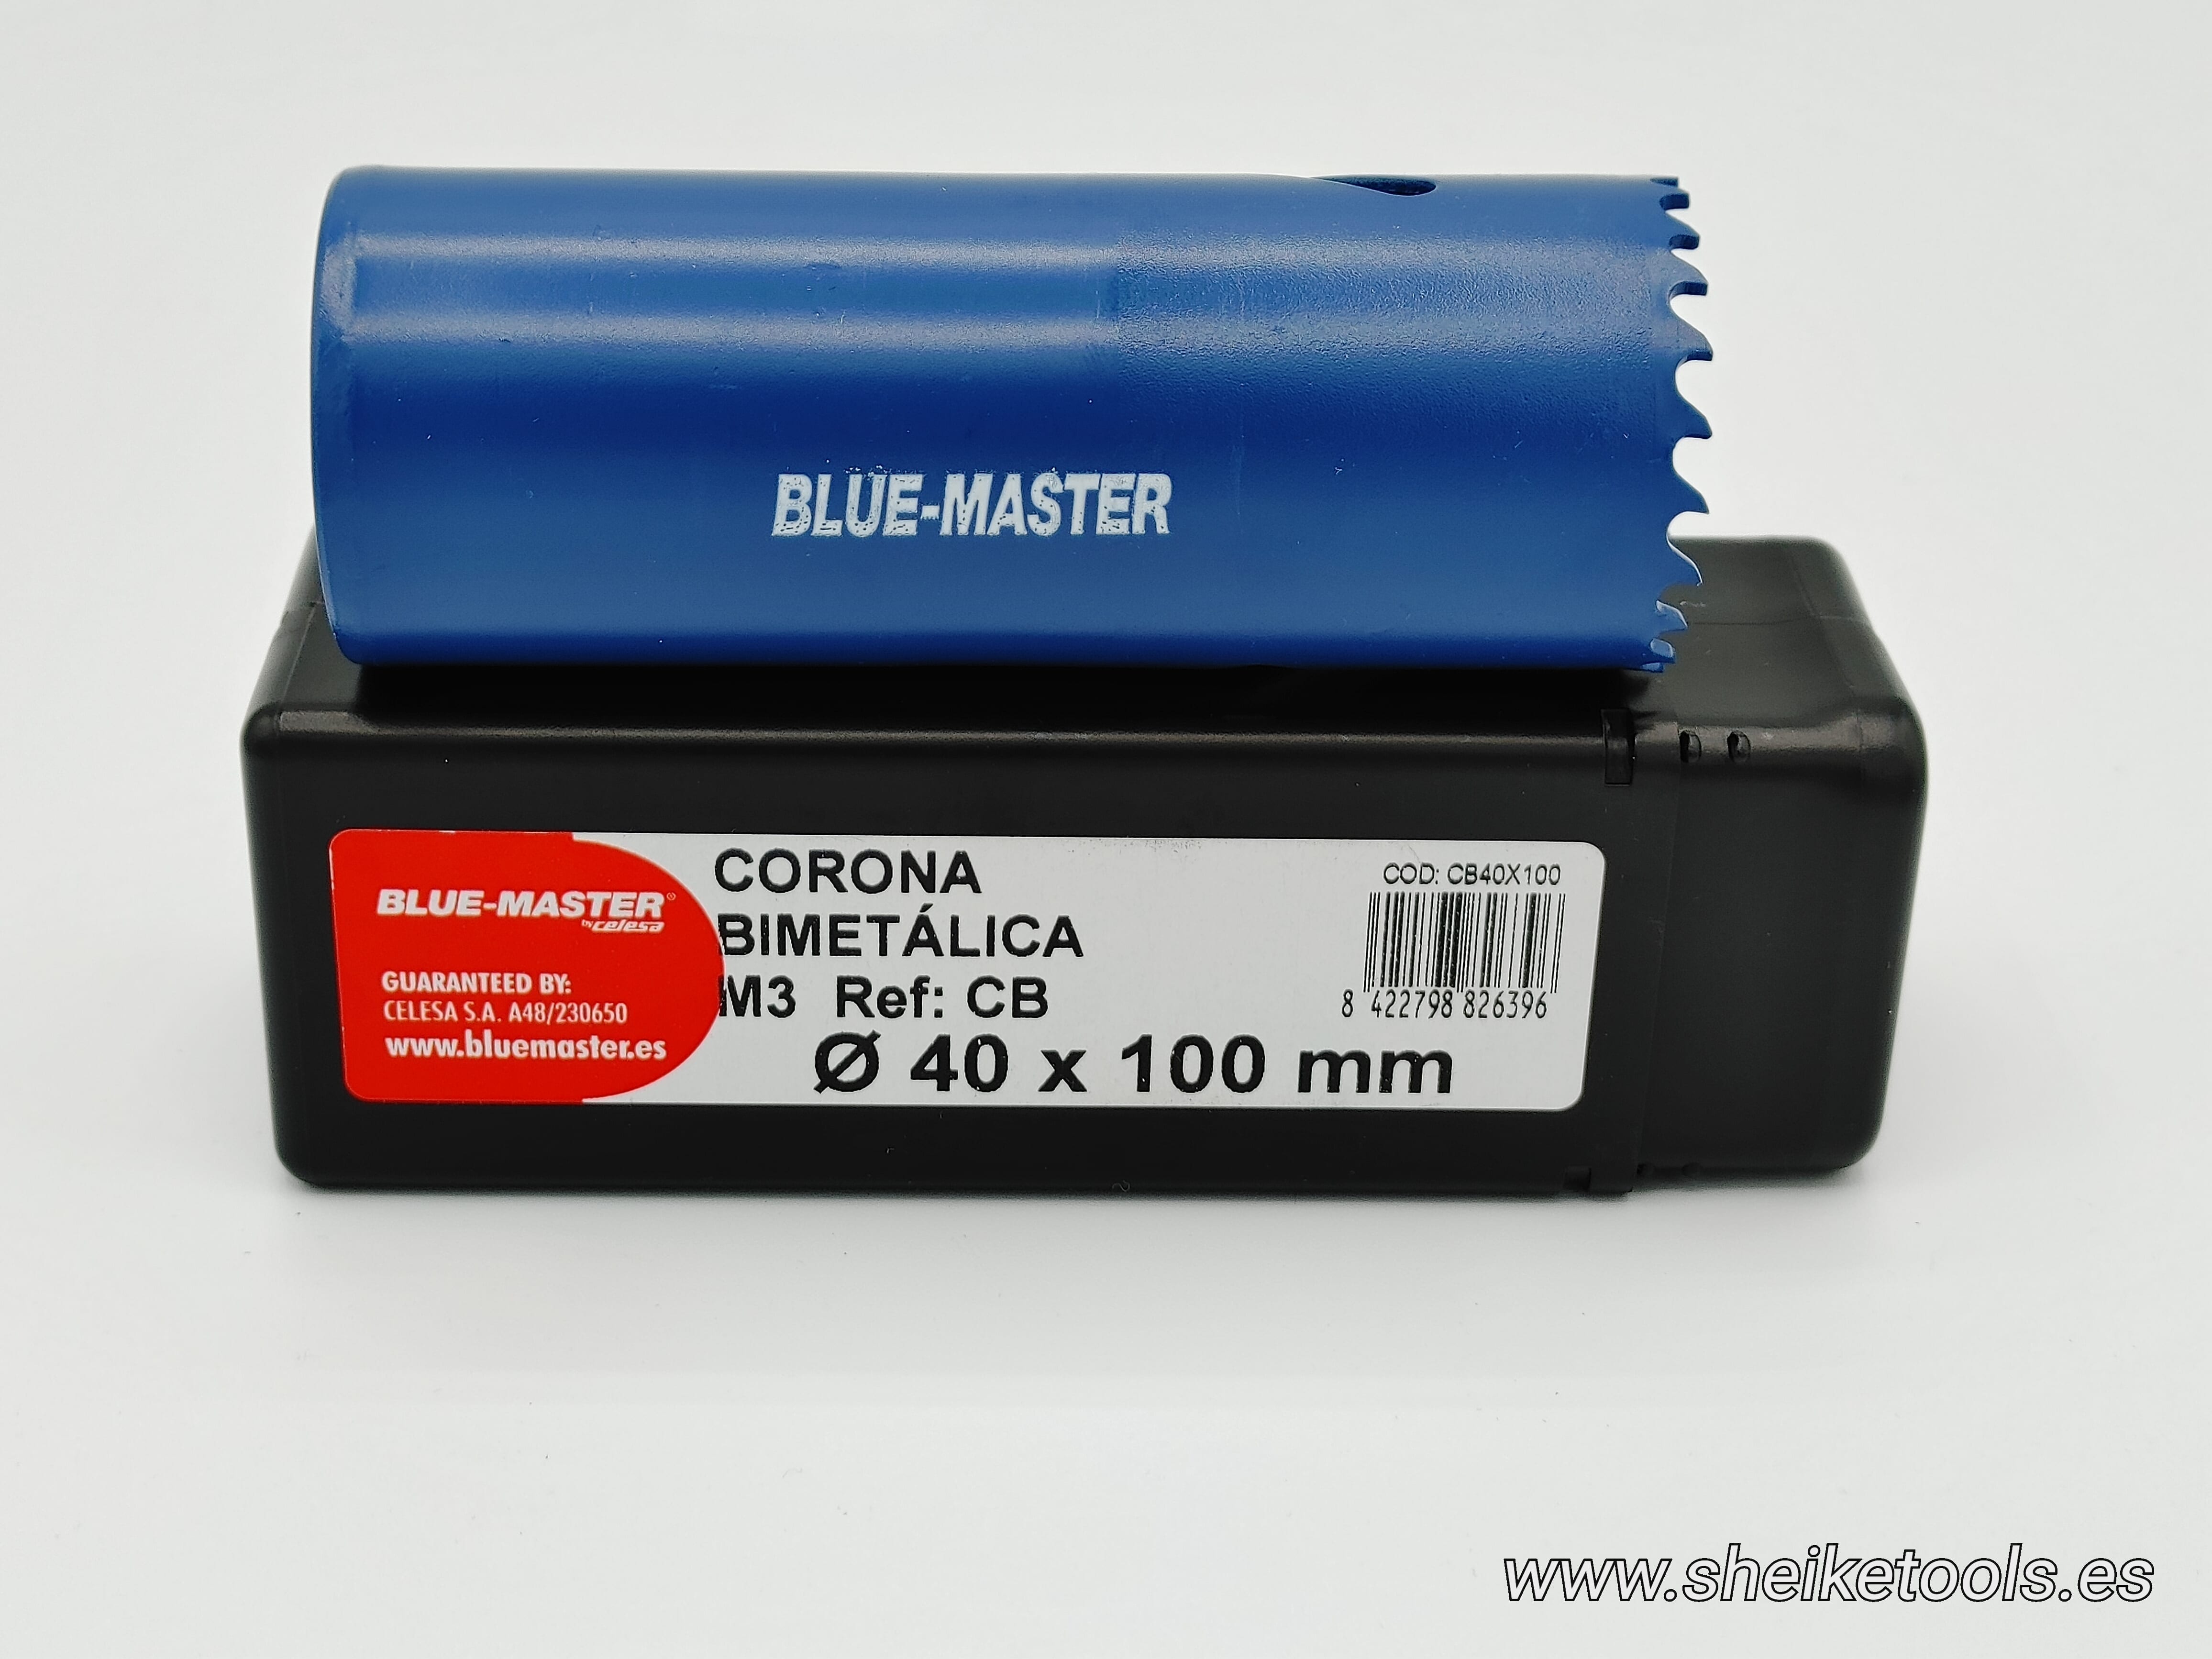 Corona bimetálica blue-master